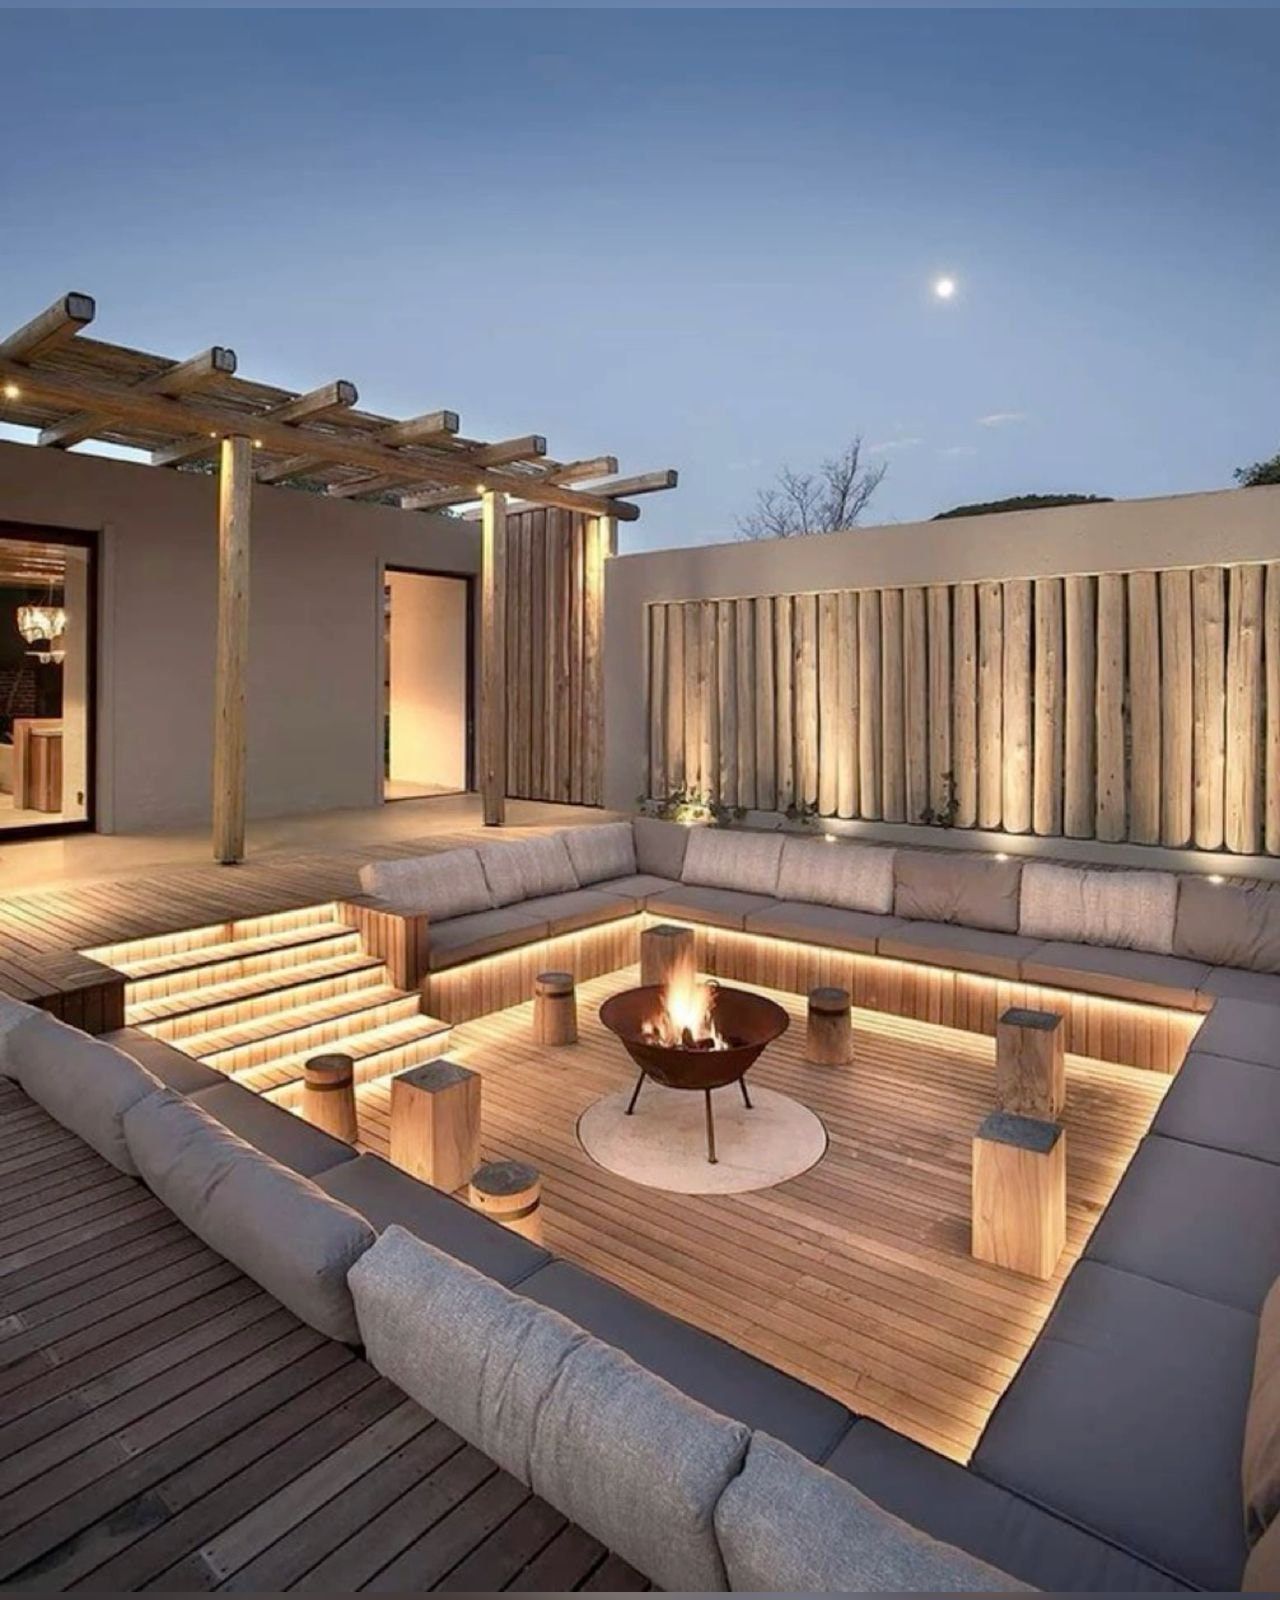 Stunning Gazebo Design Ideas for Your Backyard